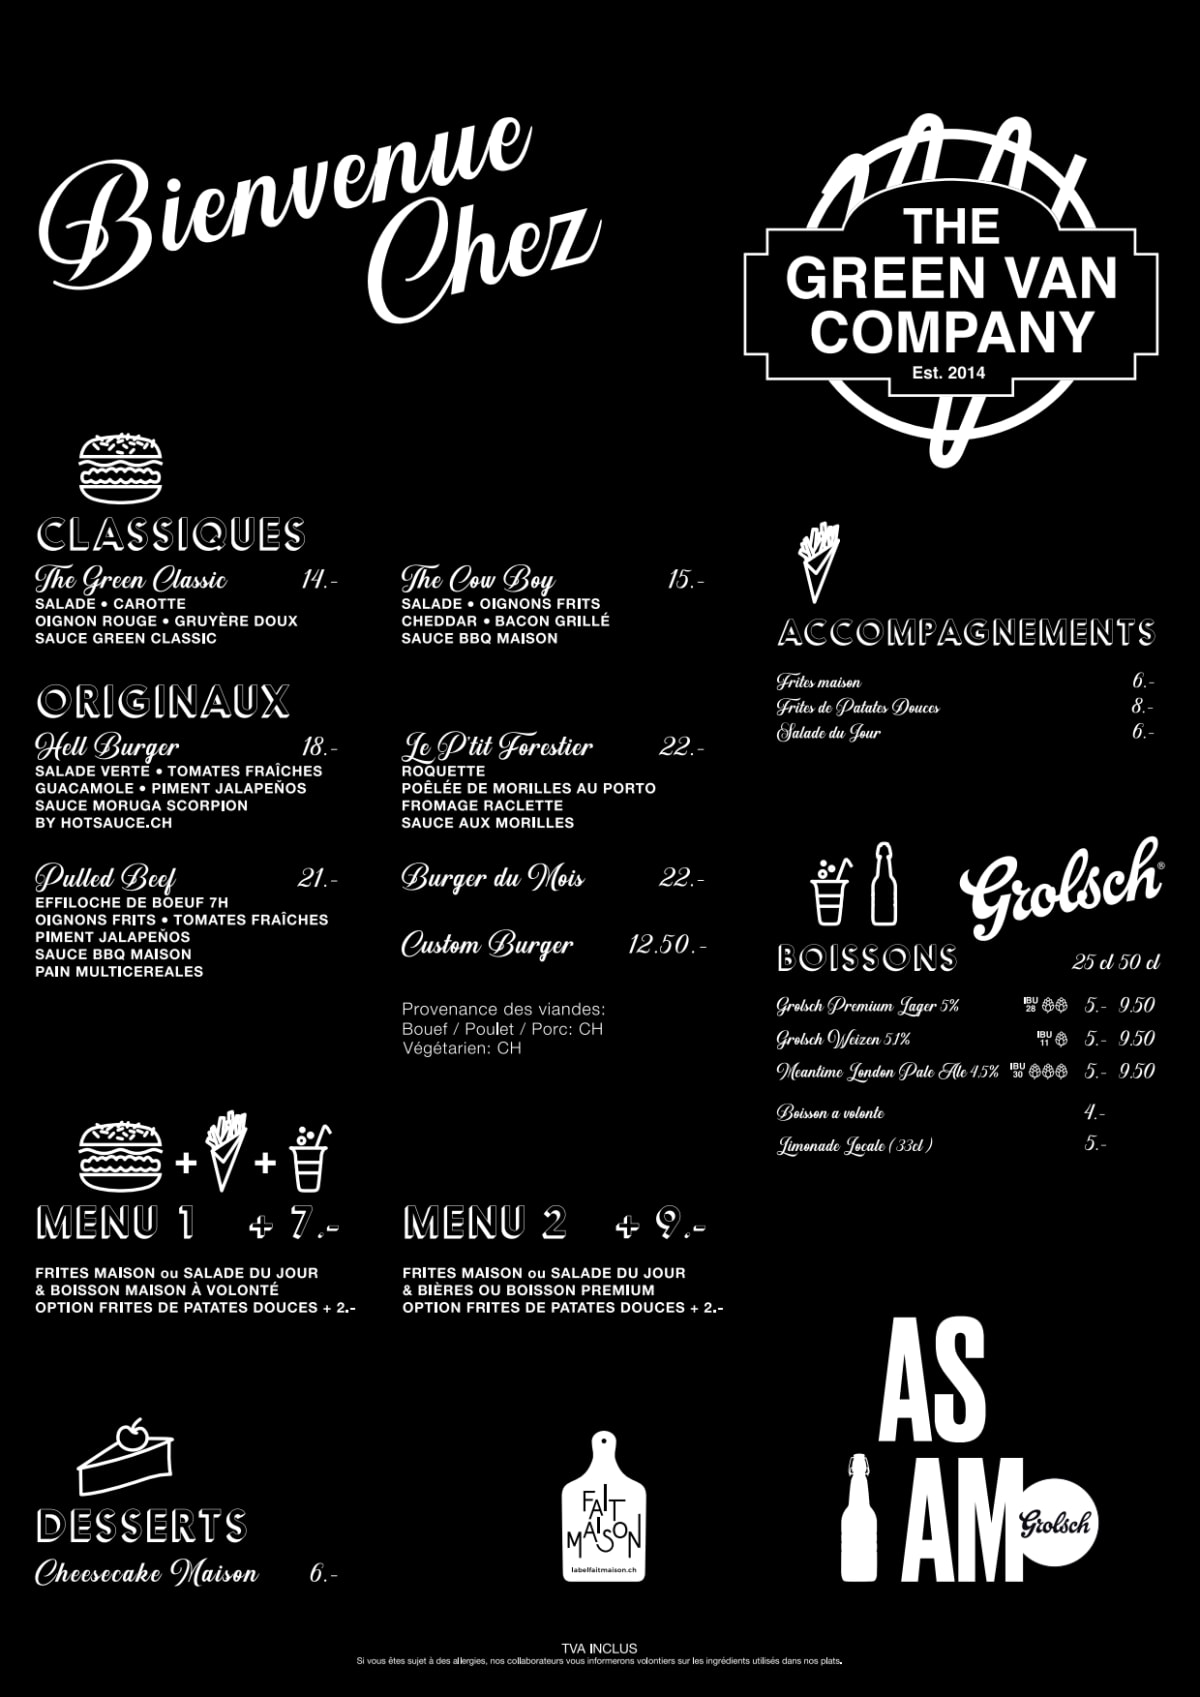 The Green Van Company Genève menu